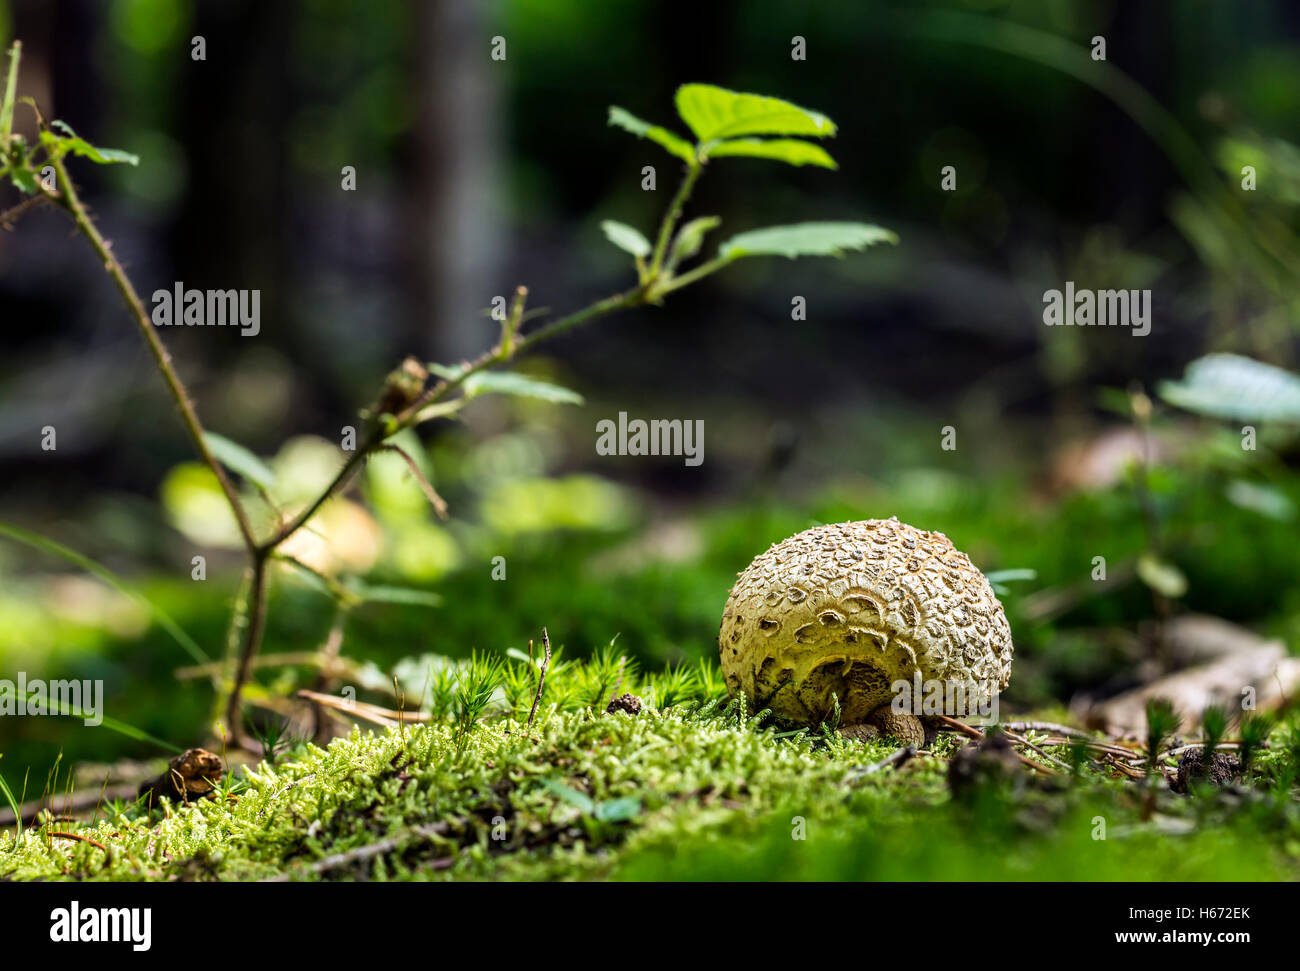 Lycoperdon marginatum mushroom growing in a forest ground. Stock Photo